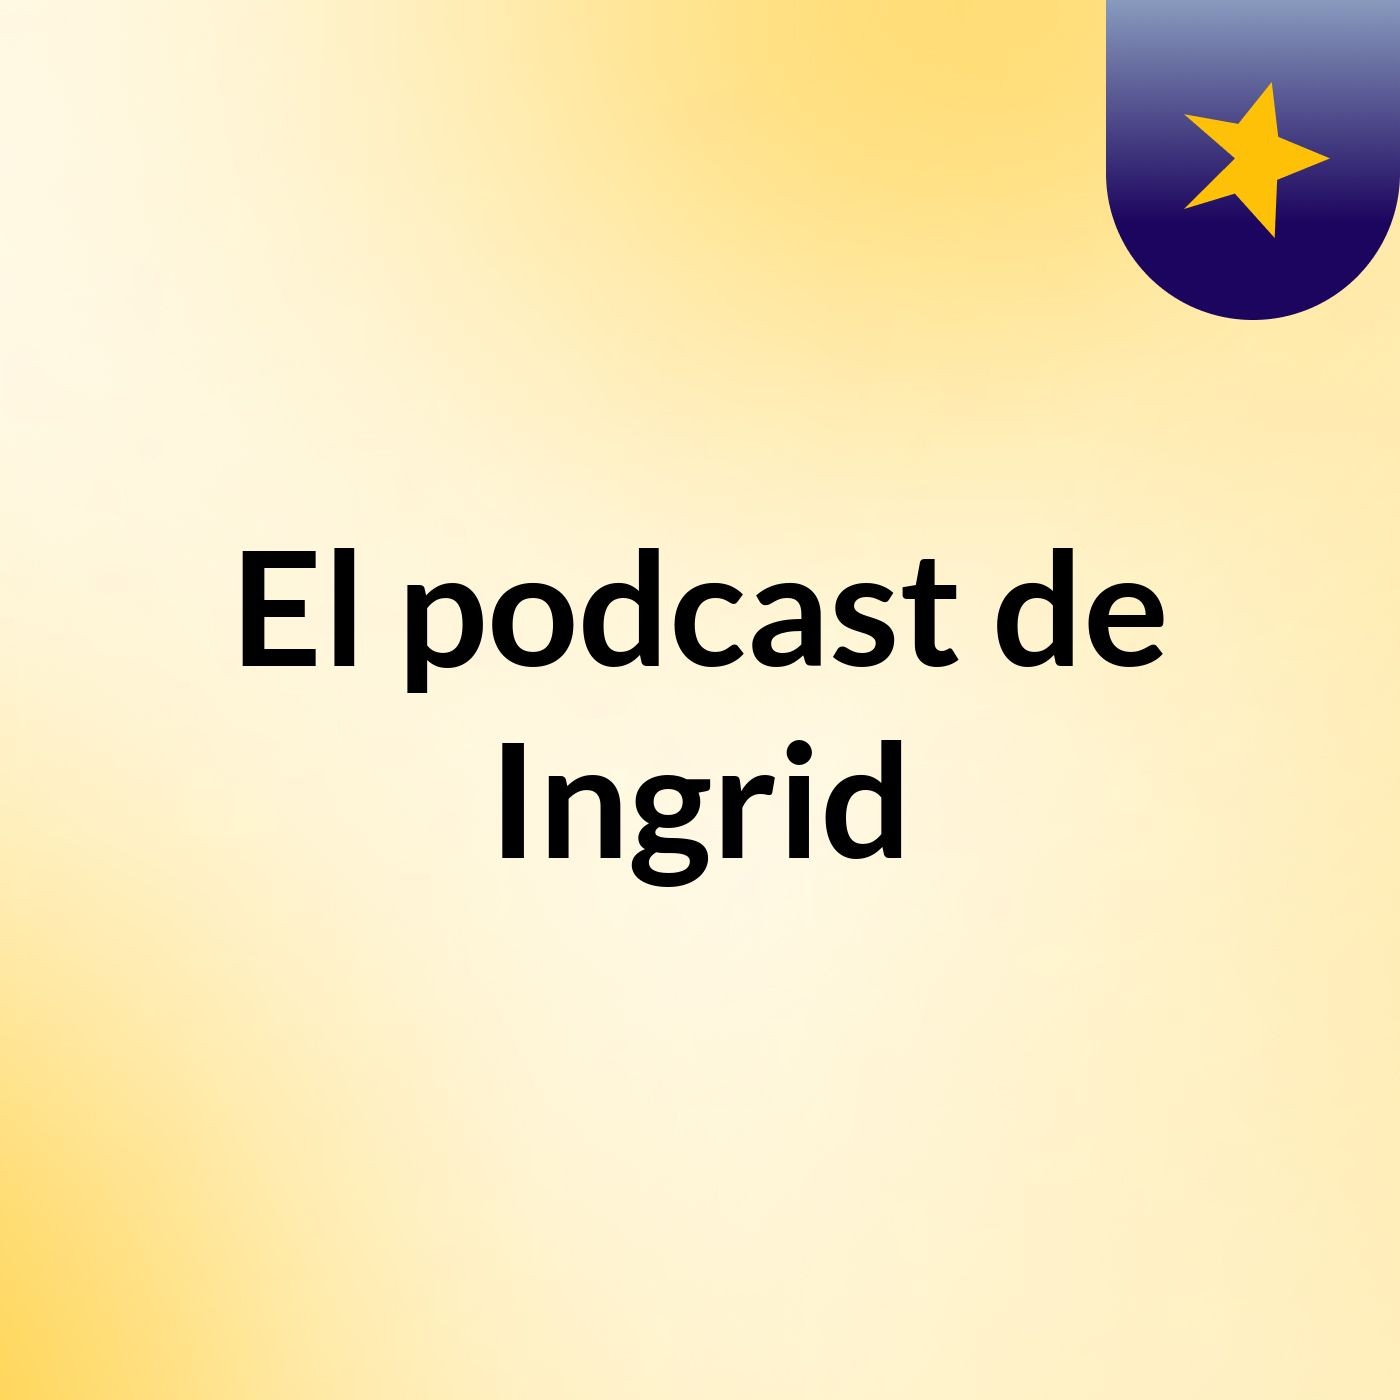 El podcast de Ingrid